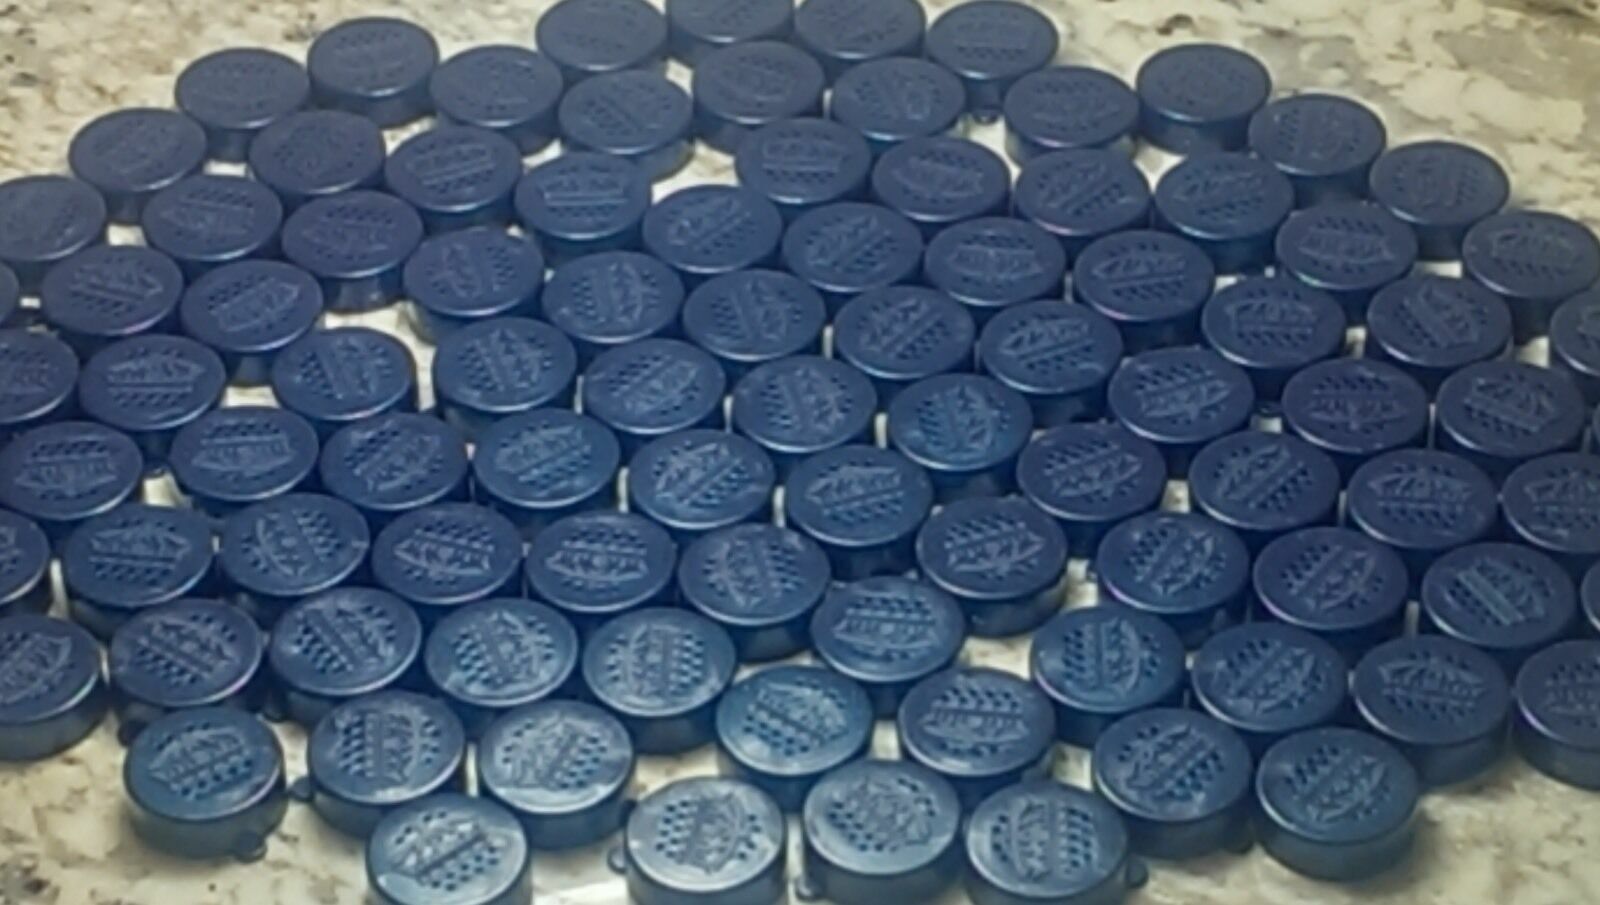 100 Corona Salt and Pepper Shaker Caps Lids for Corona / Coronita Bottles